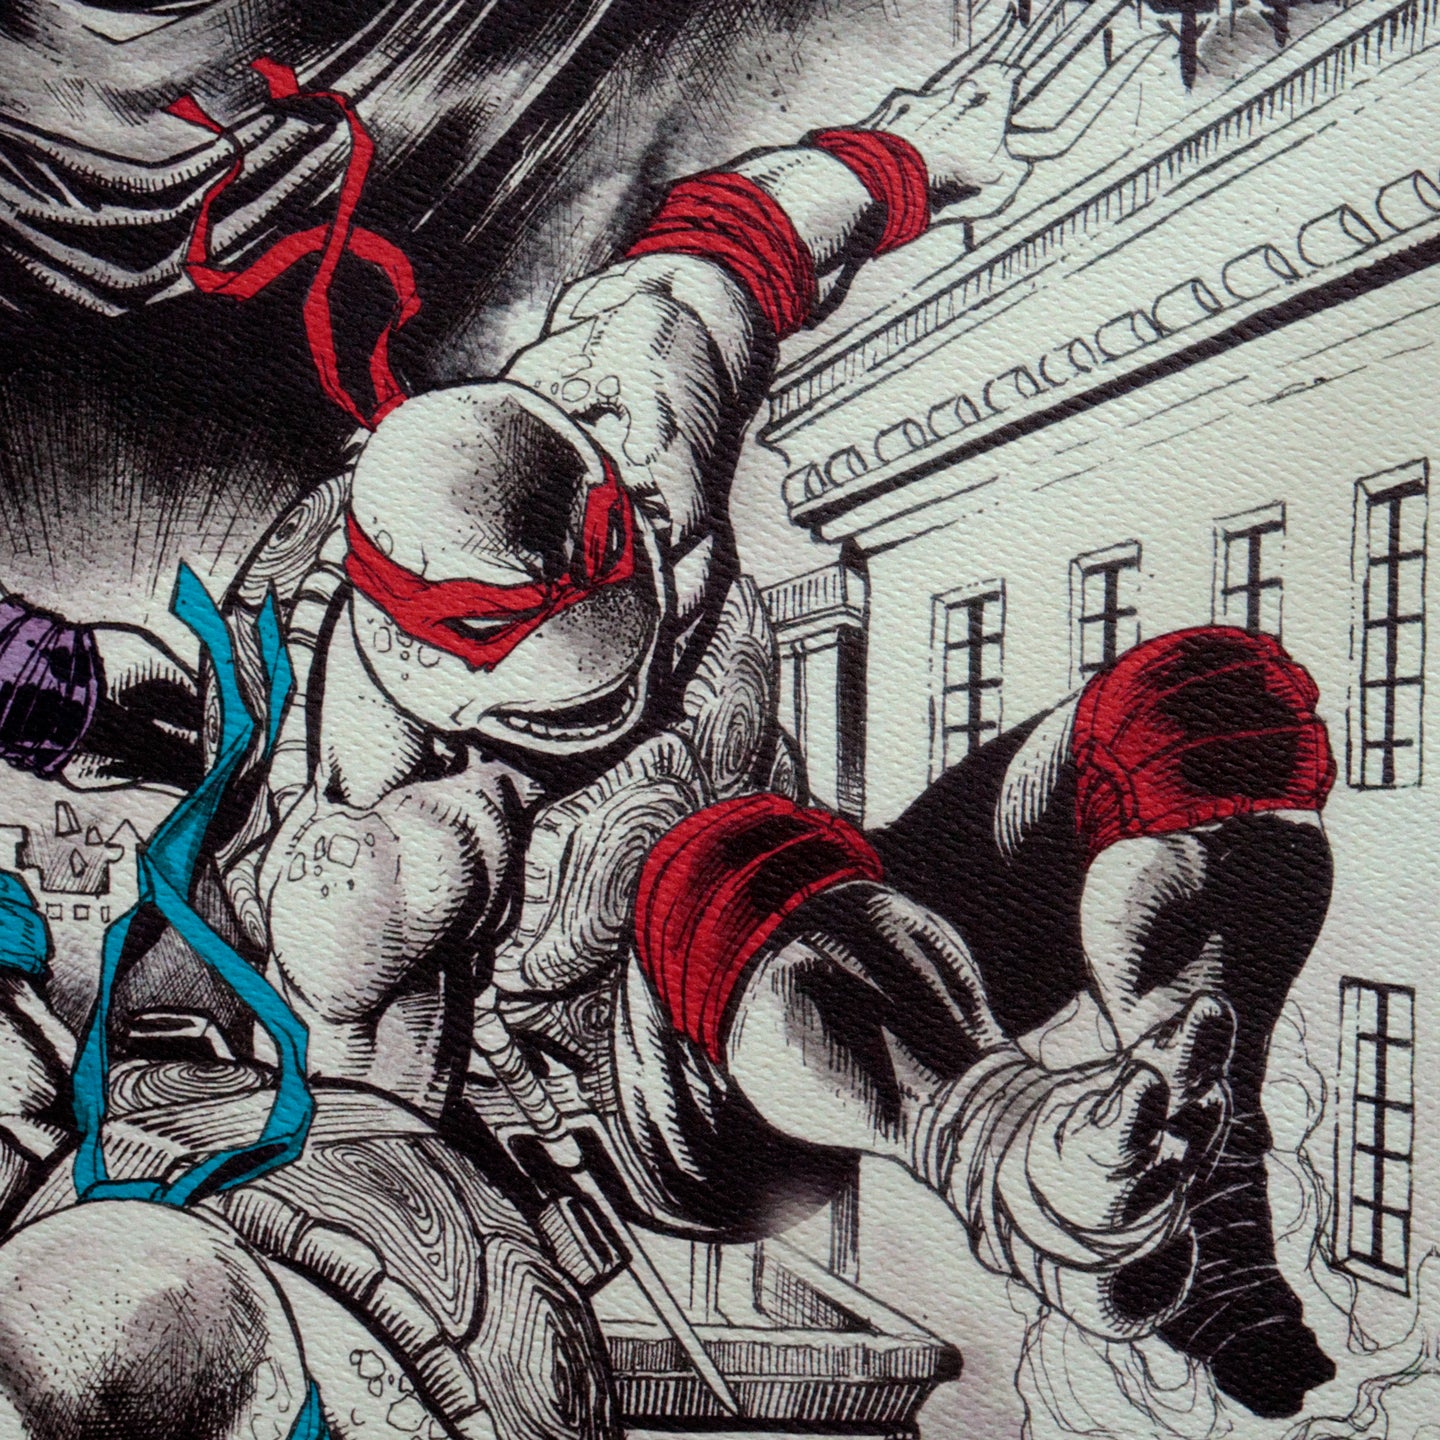 Limited edition Teenage Mutant Ninja Turtles art print from Fanattik